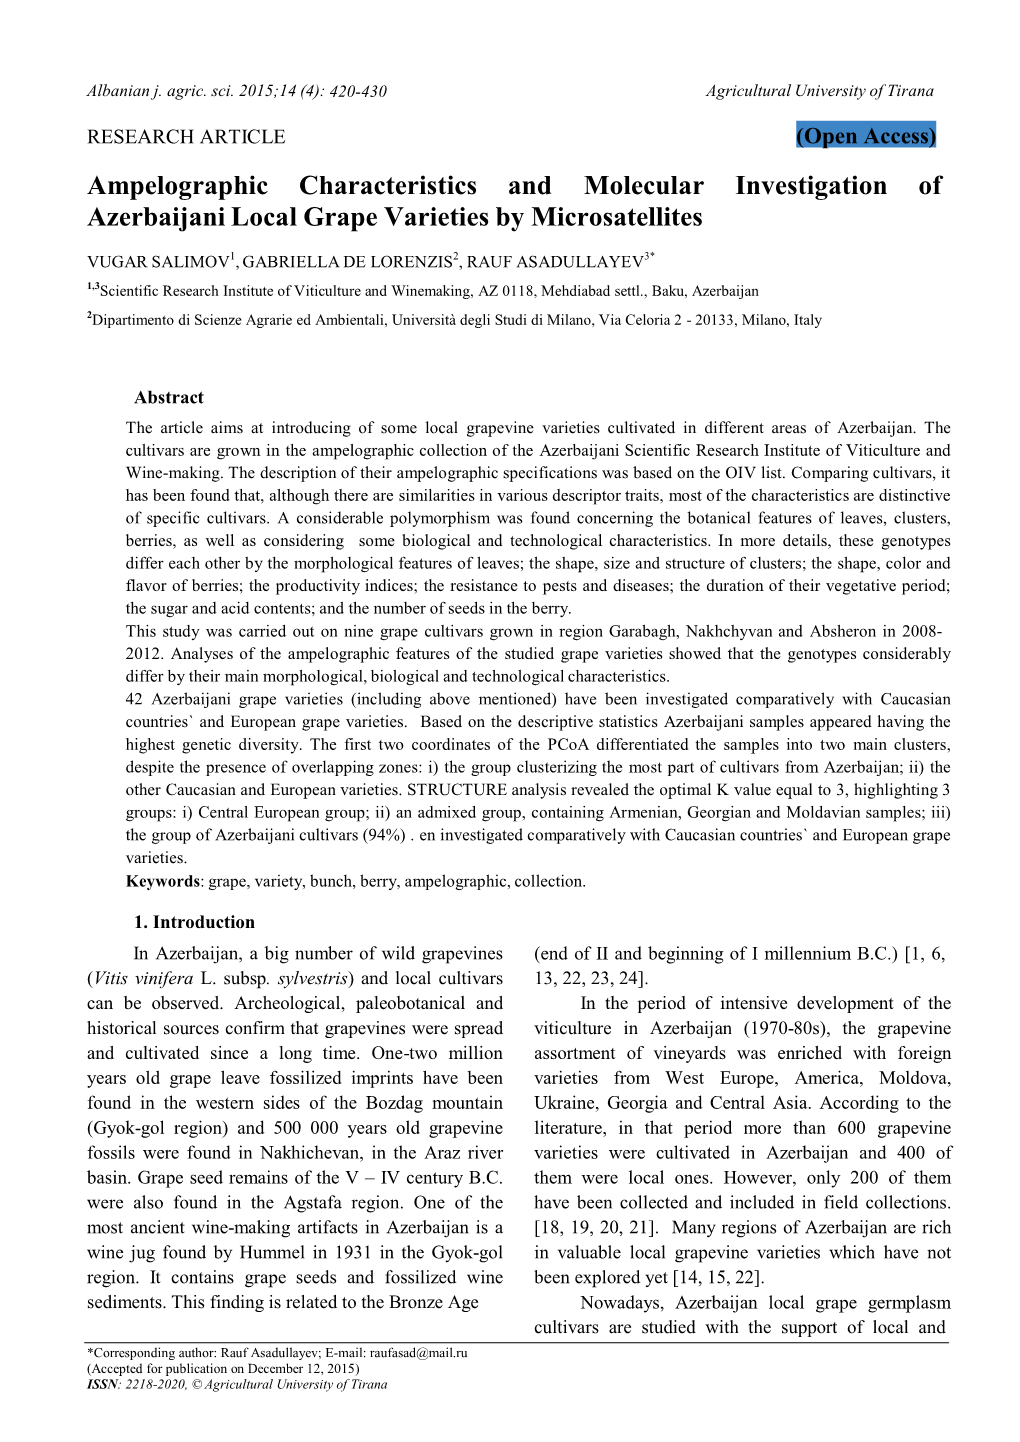 Ampelographic Characteristics and Molecular Investigation of Azerbaijani Local Grape Varieties by Microsatellites